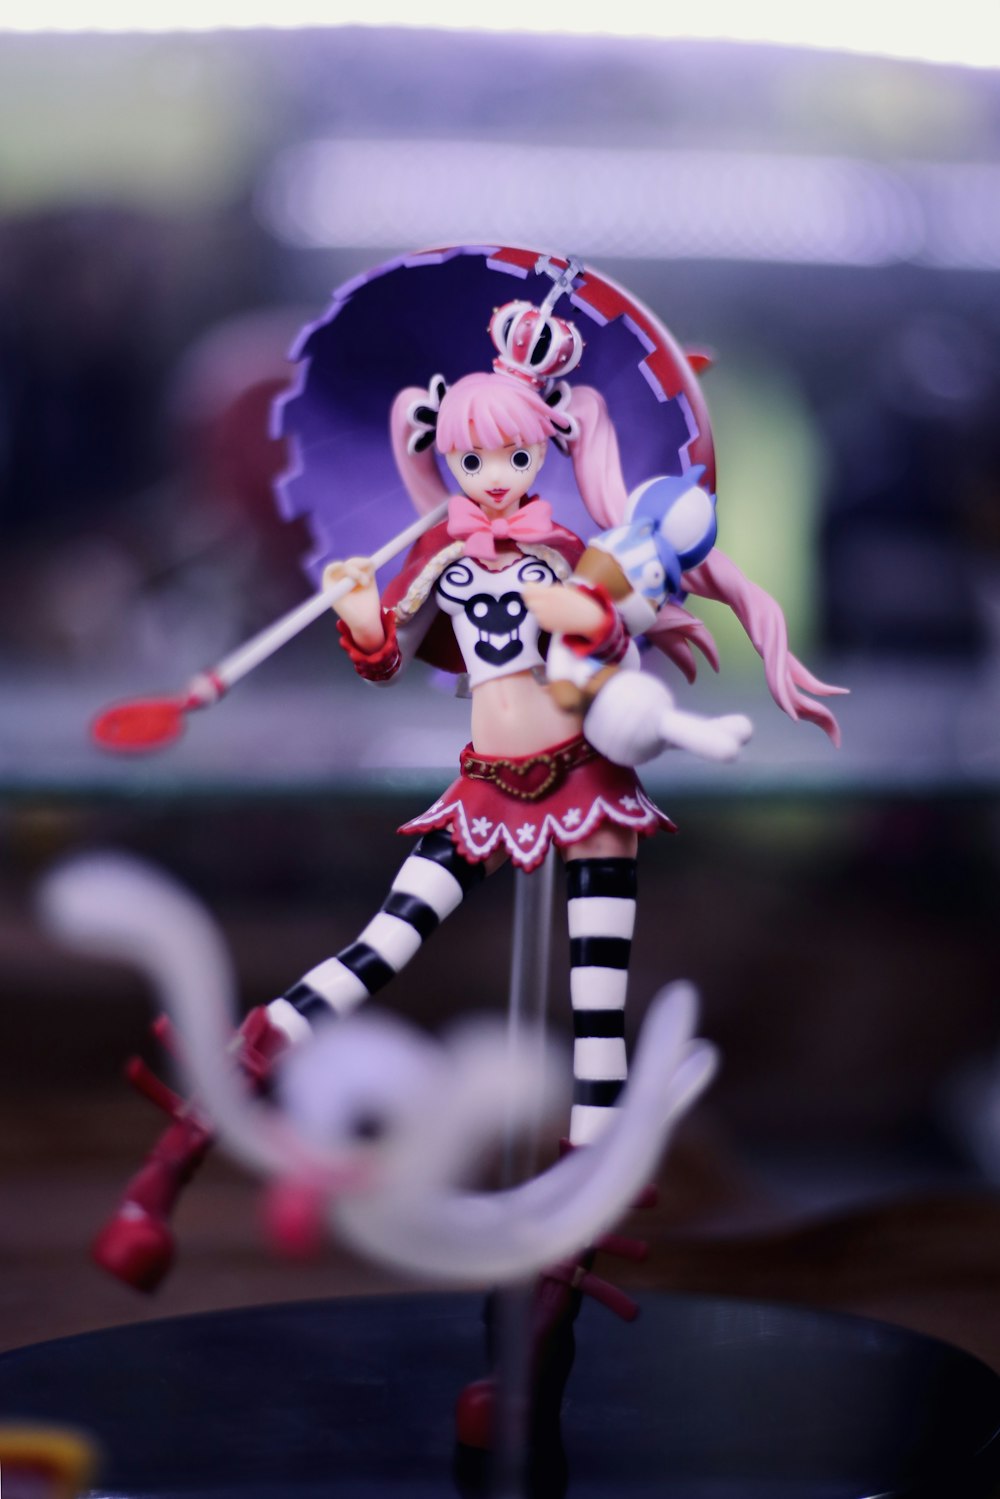 anime figurine of a girl character